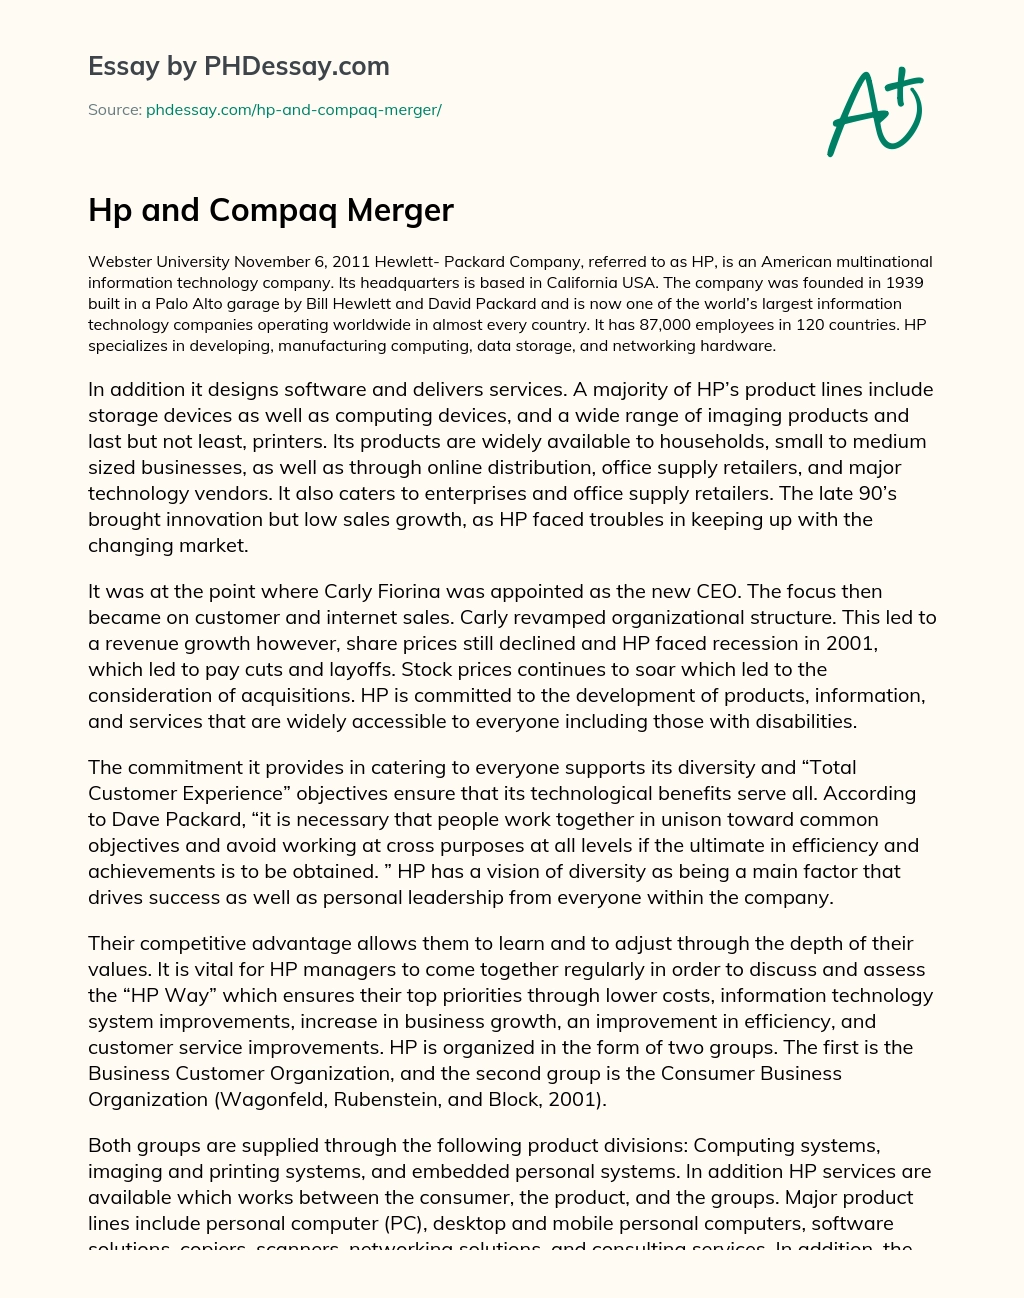 Hp and Compaq Merger essay